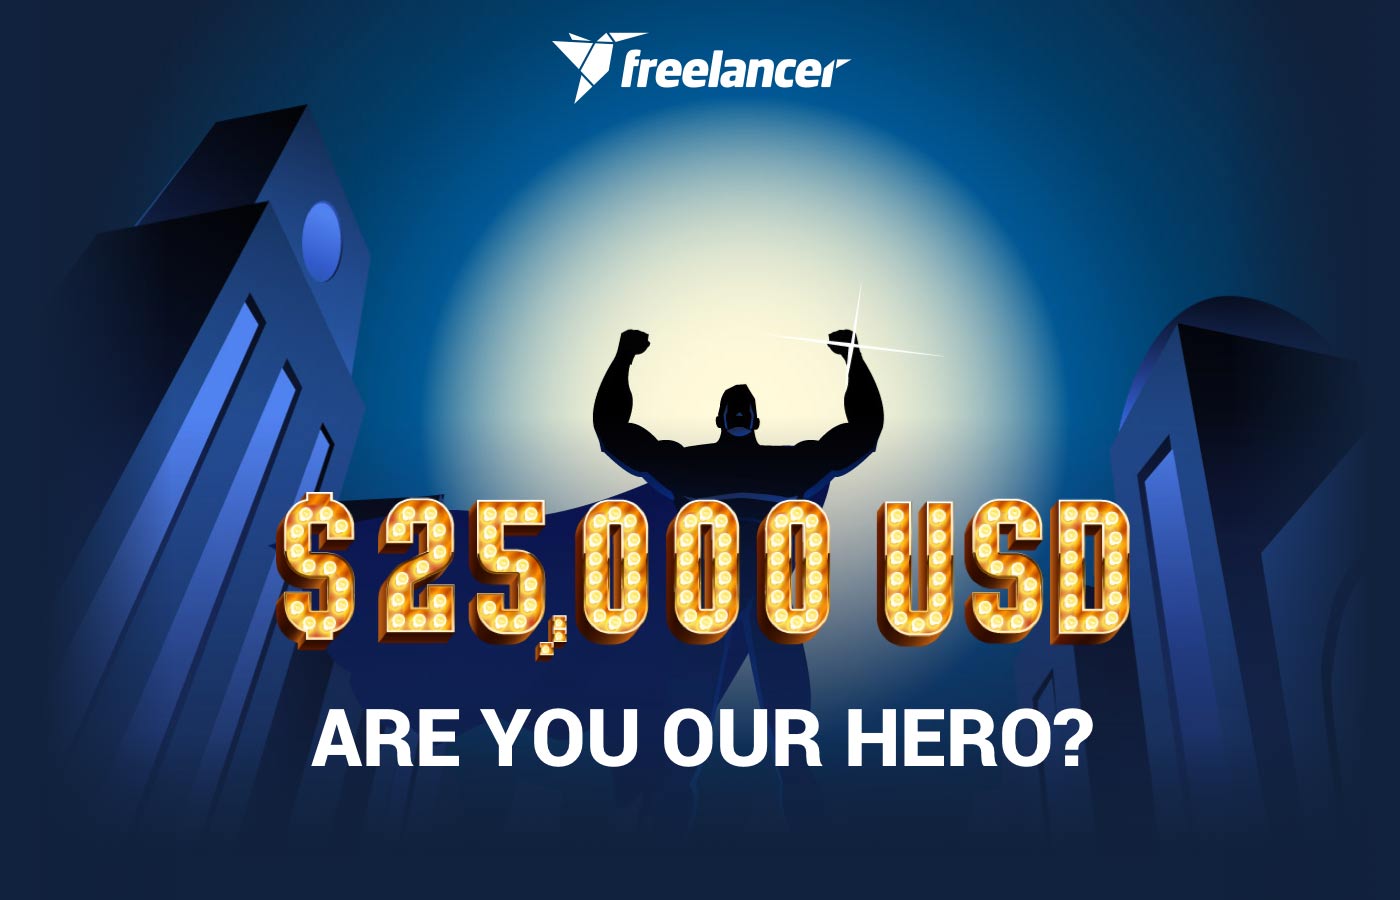 $25,000 You're the hero we need